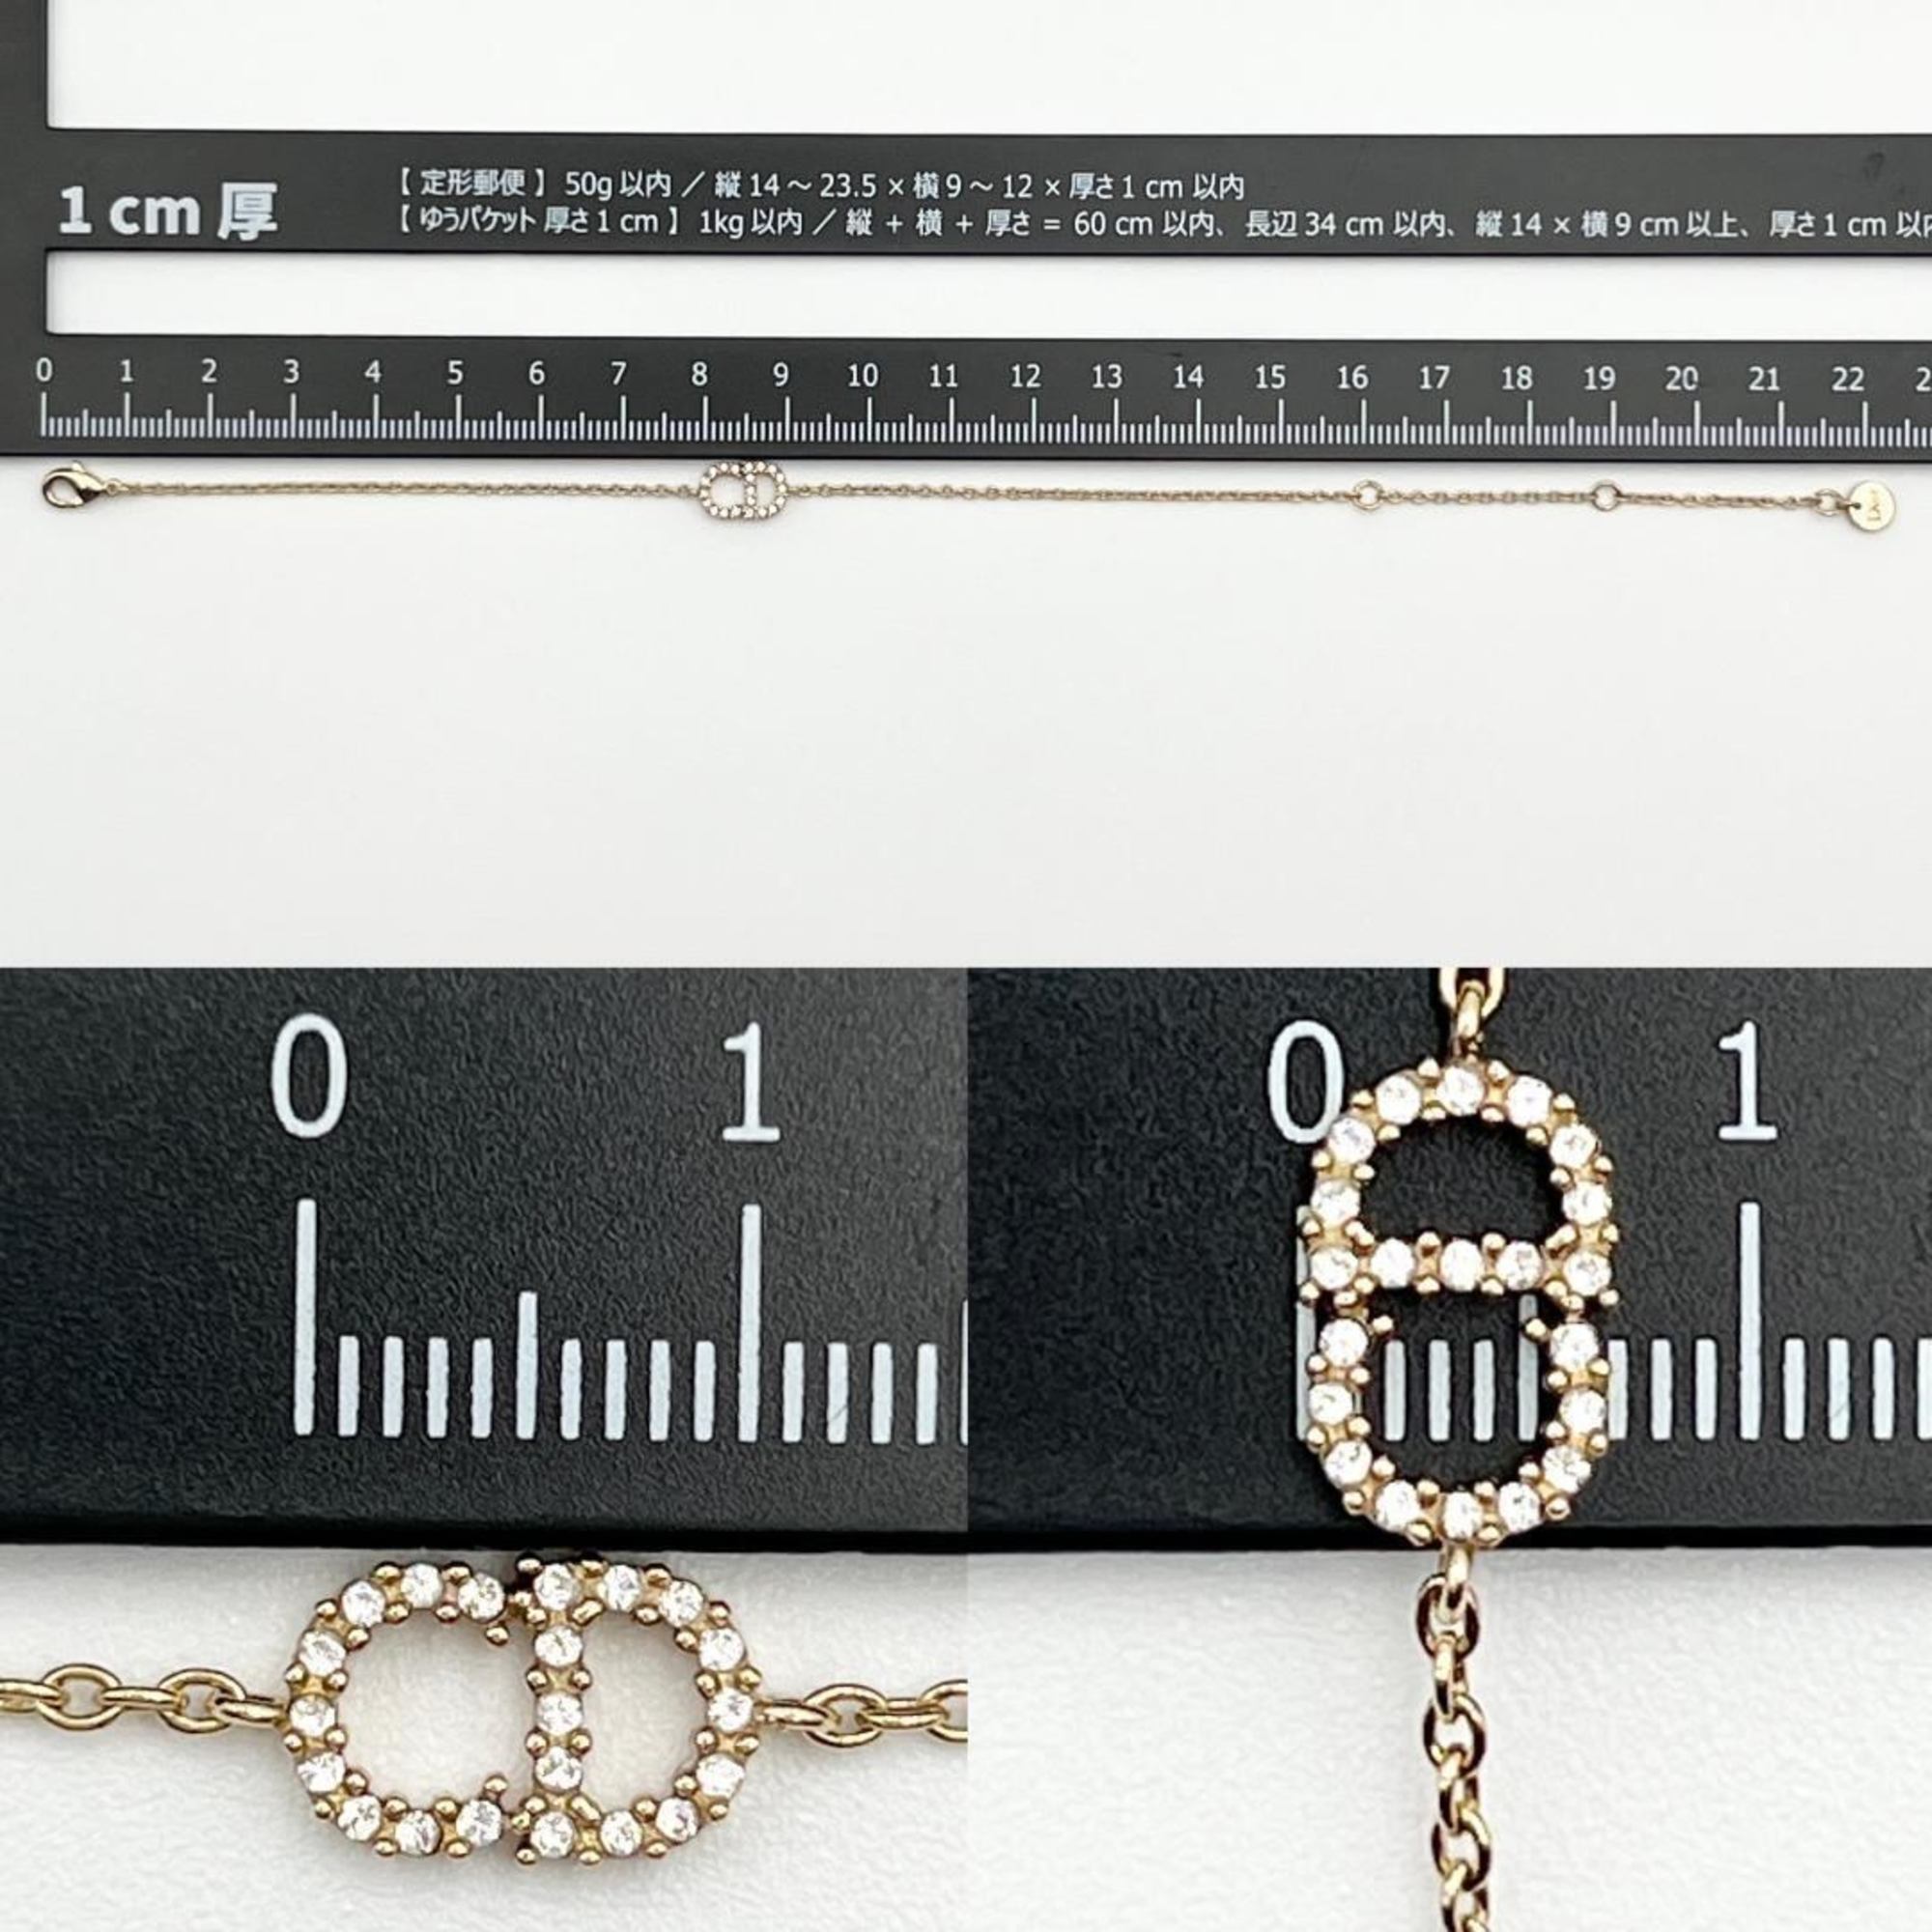 Christian Dior Dior Women's Bracelets and Bangles DIOR CLAIR D LUNE Bracelet